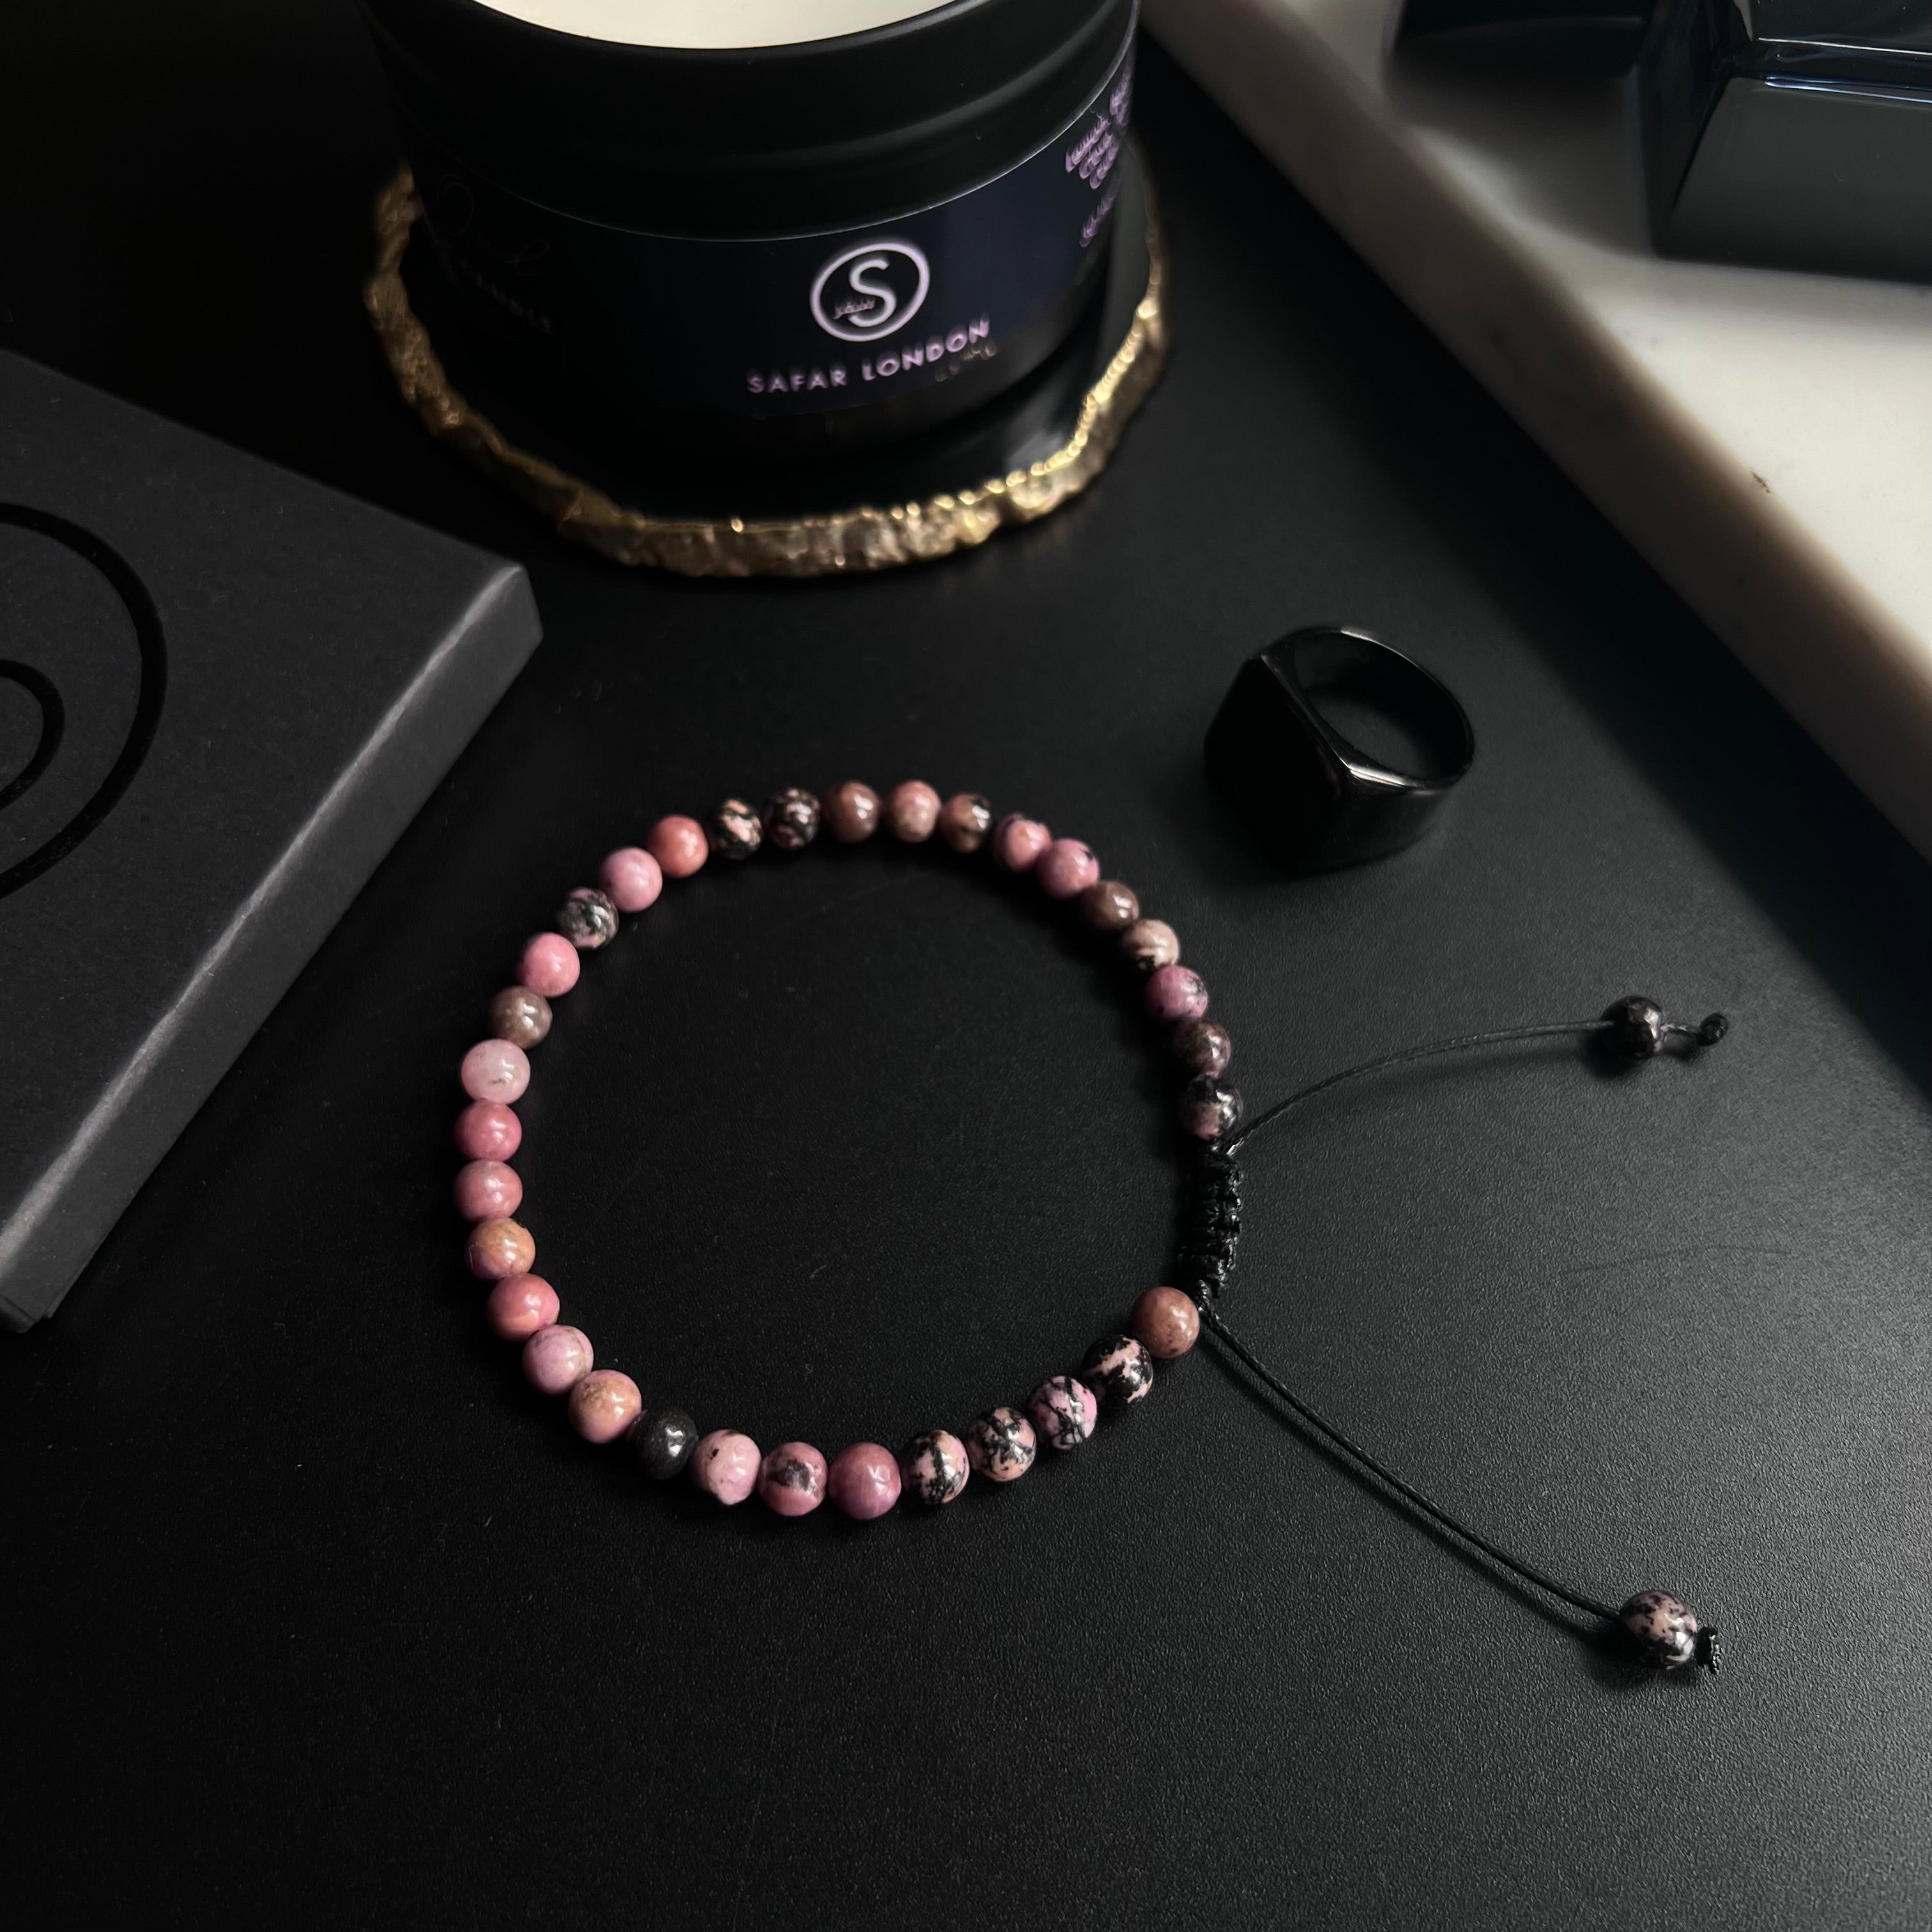 NEW 33 Bead Tasbih Bracelet Pink Rhodonite Stone by Safar London